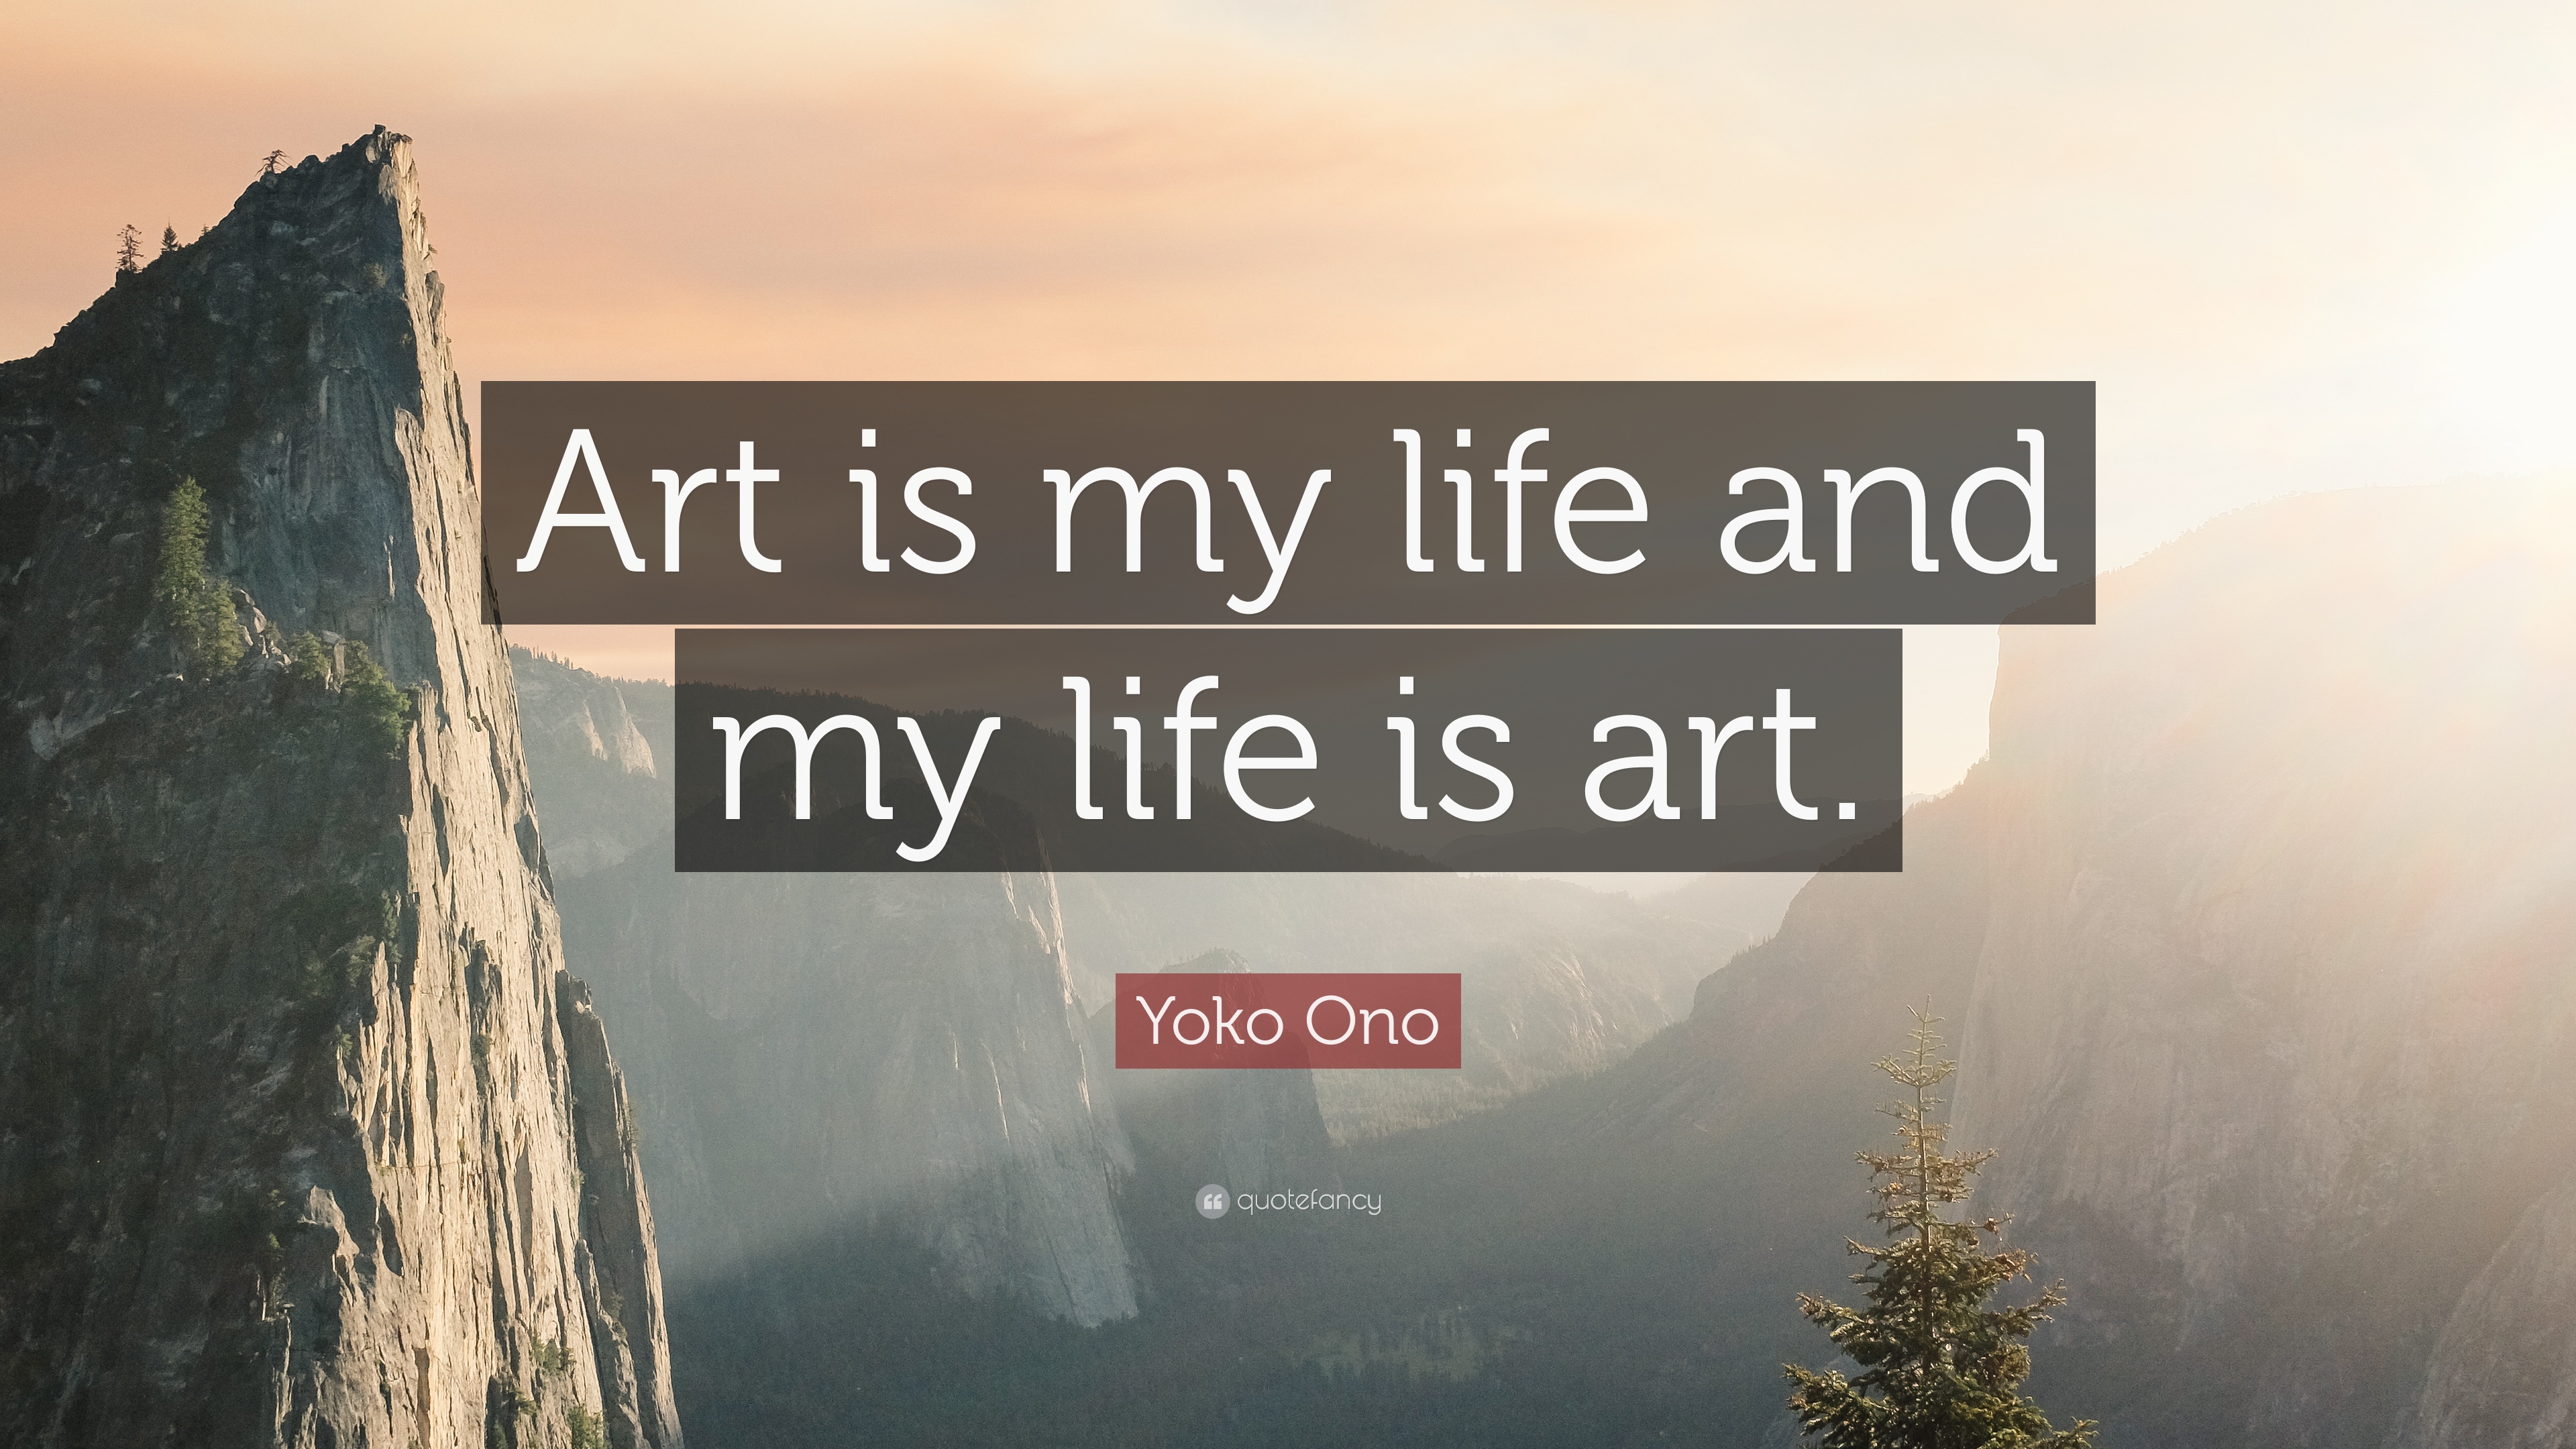 Yoko Ono Quote: "Art is my life and my life is art. 